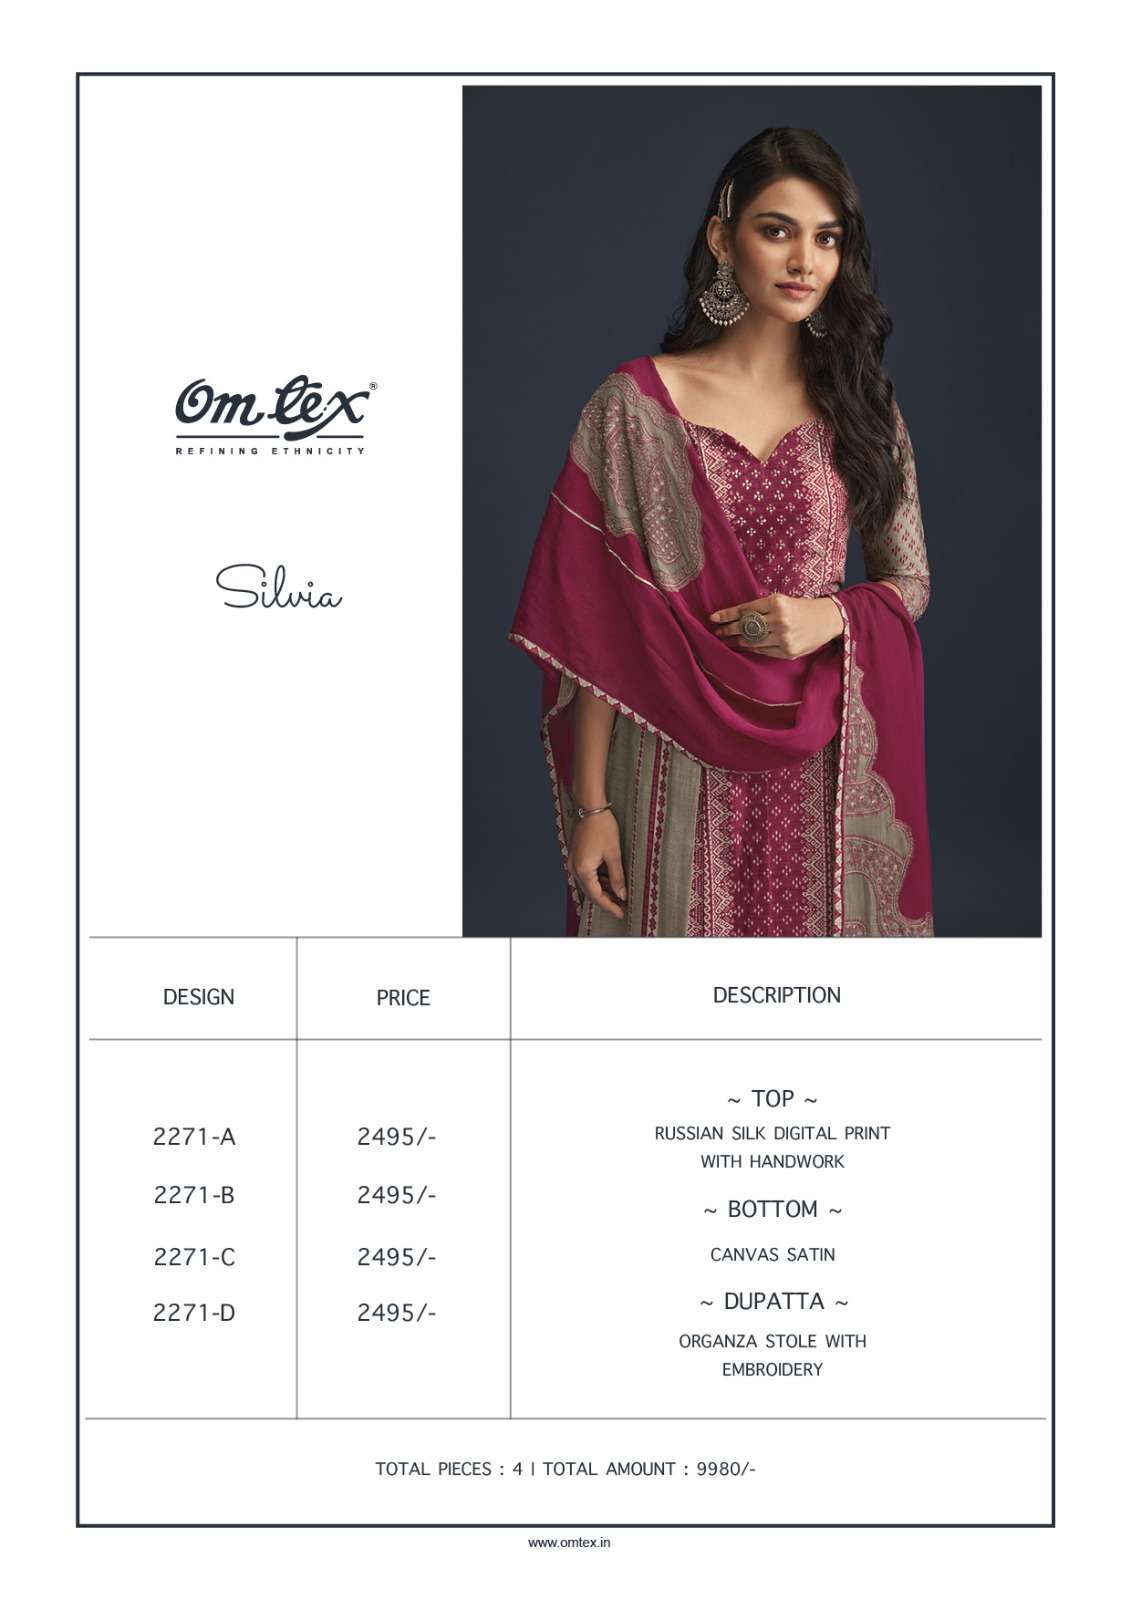 omtex silvia 227 colours wedding wear pakistani designer suit wholesaler surat gujarat